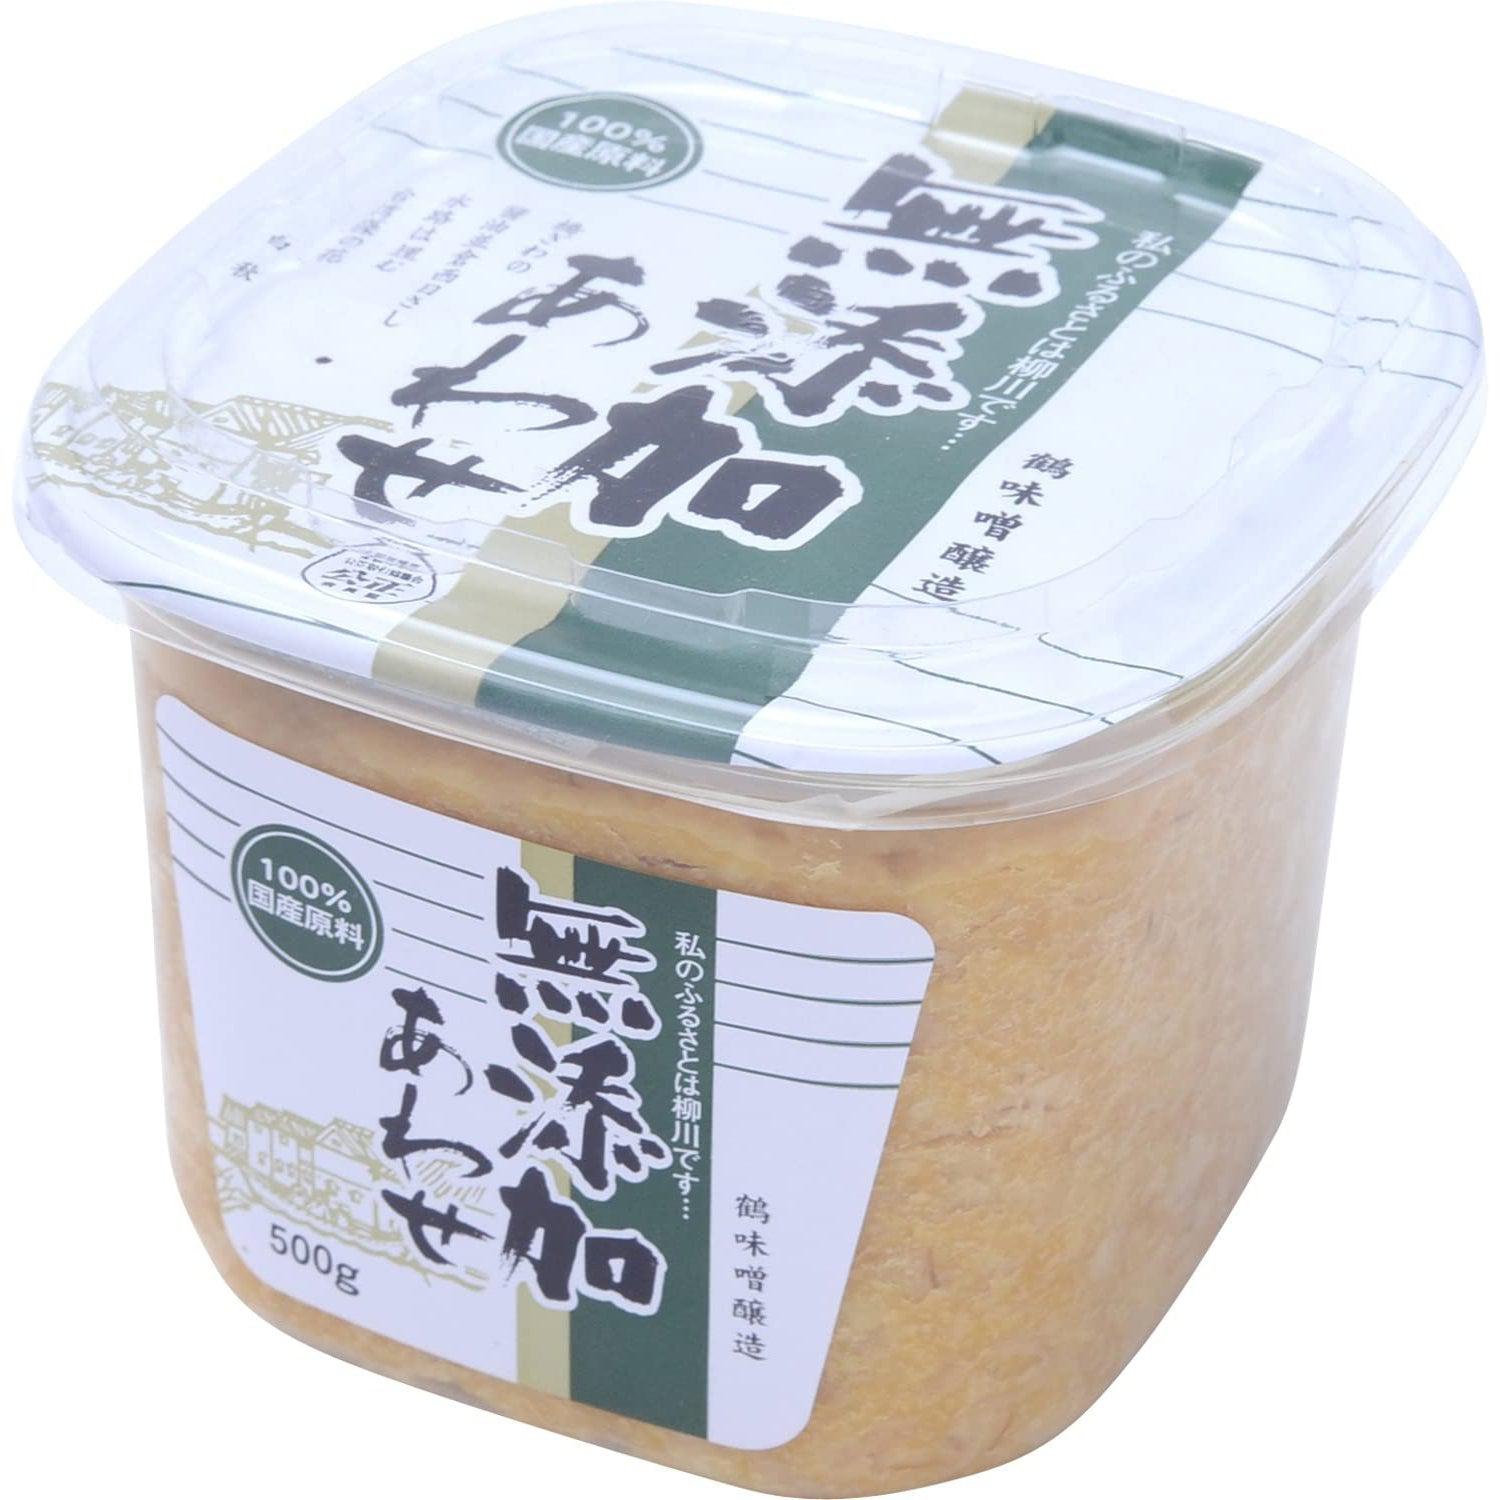 Tsurumiso Jyozo Hakushu Additive Free Awase Miso (Mixed Miso Paste) 500g, Japanese Taste